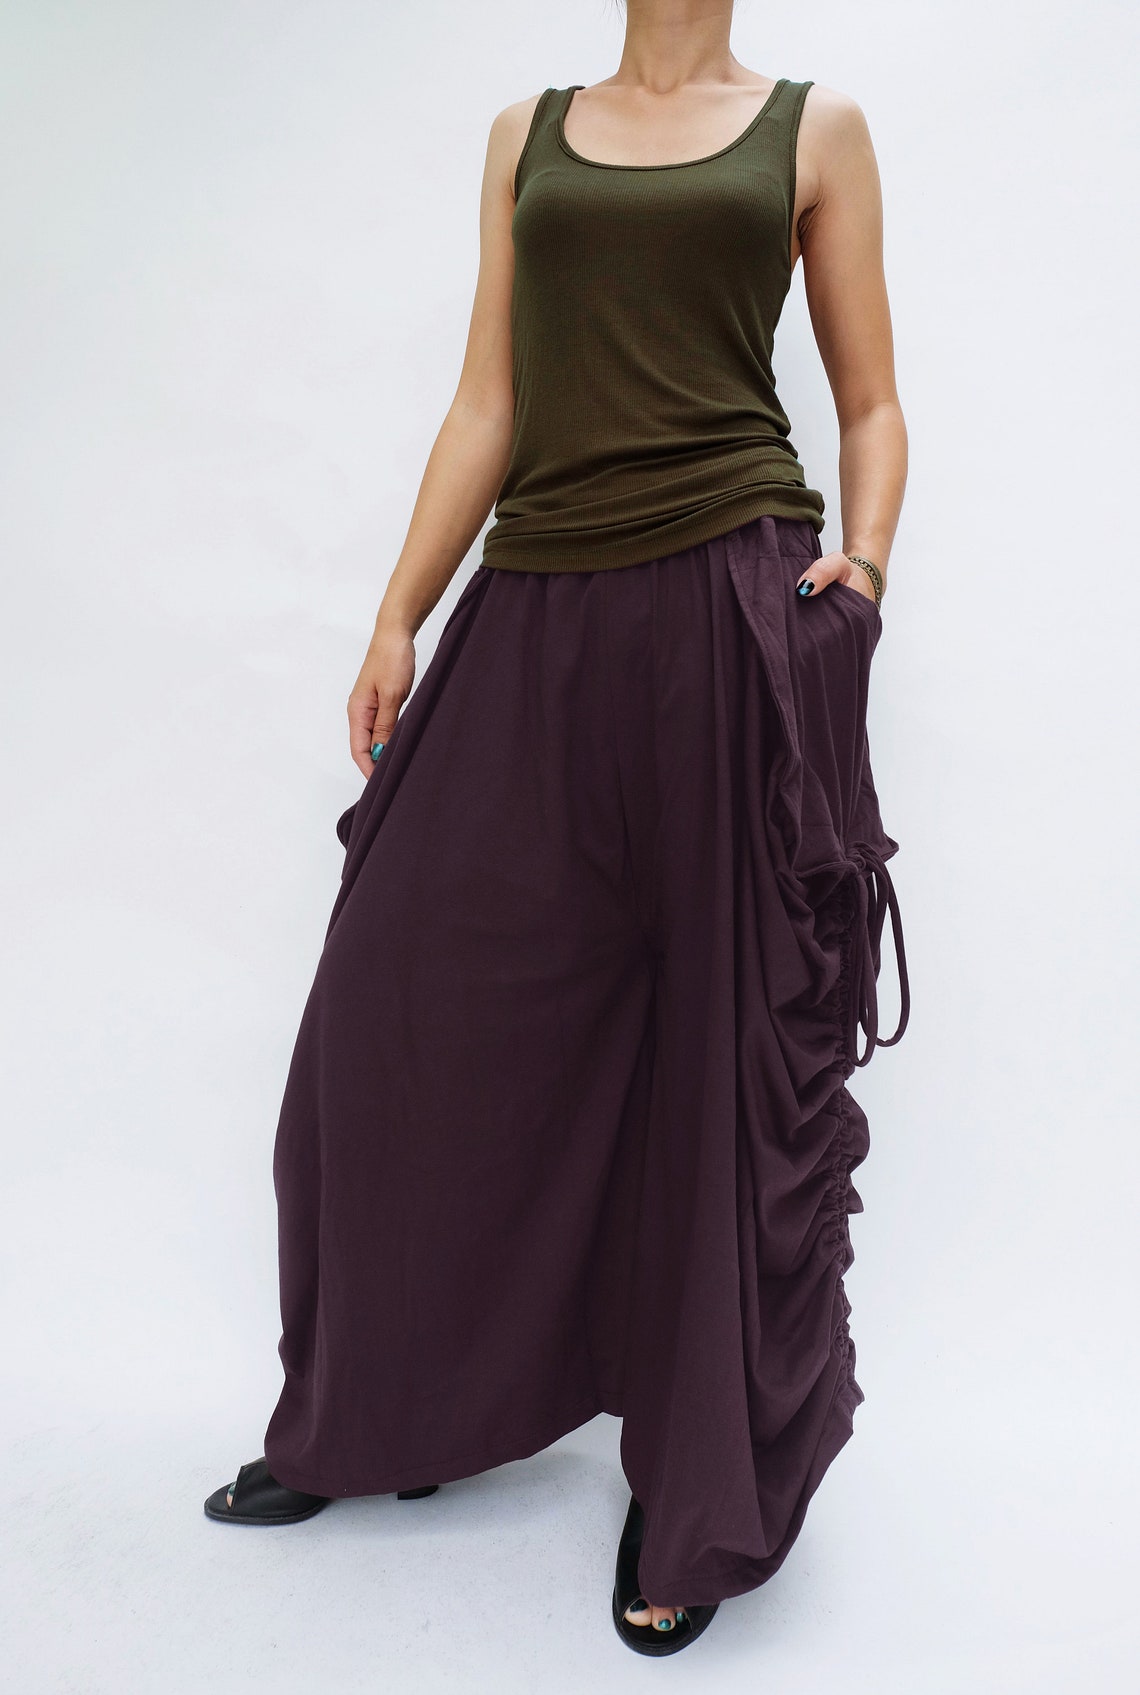 NO.175 Women's Large Patch Pocket Skirt/pants Button - Etsy